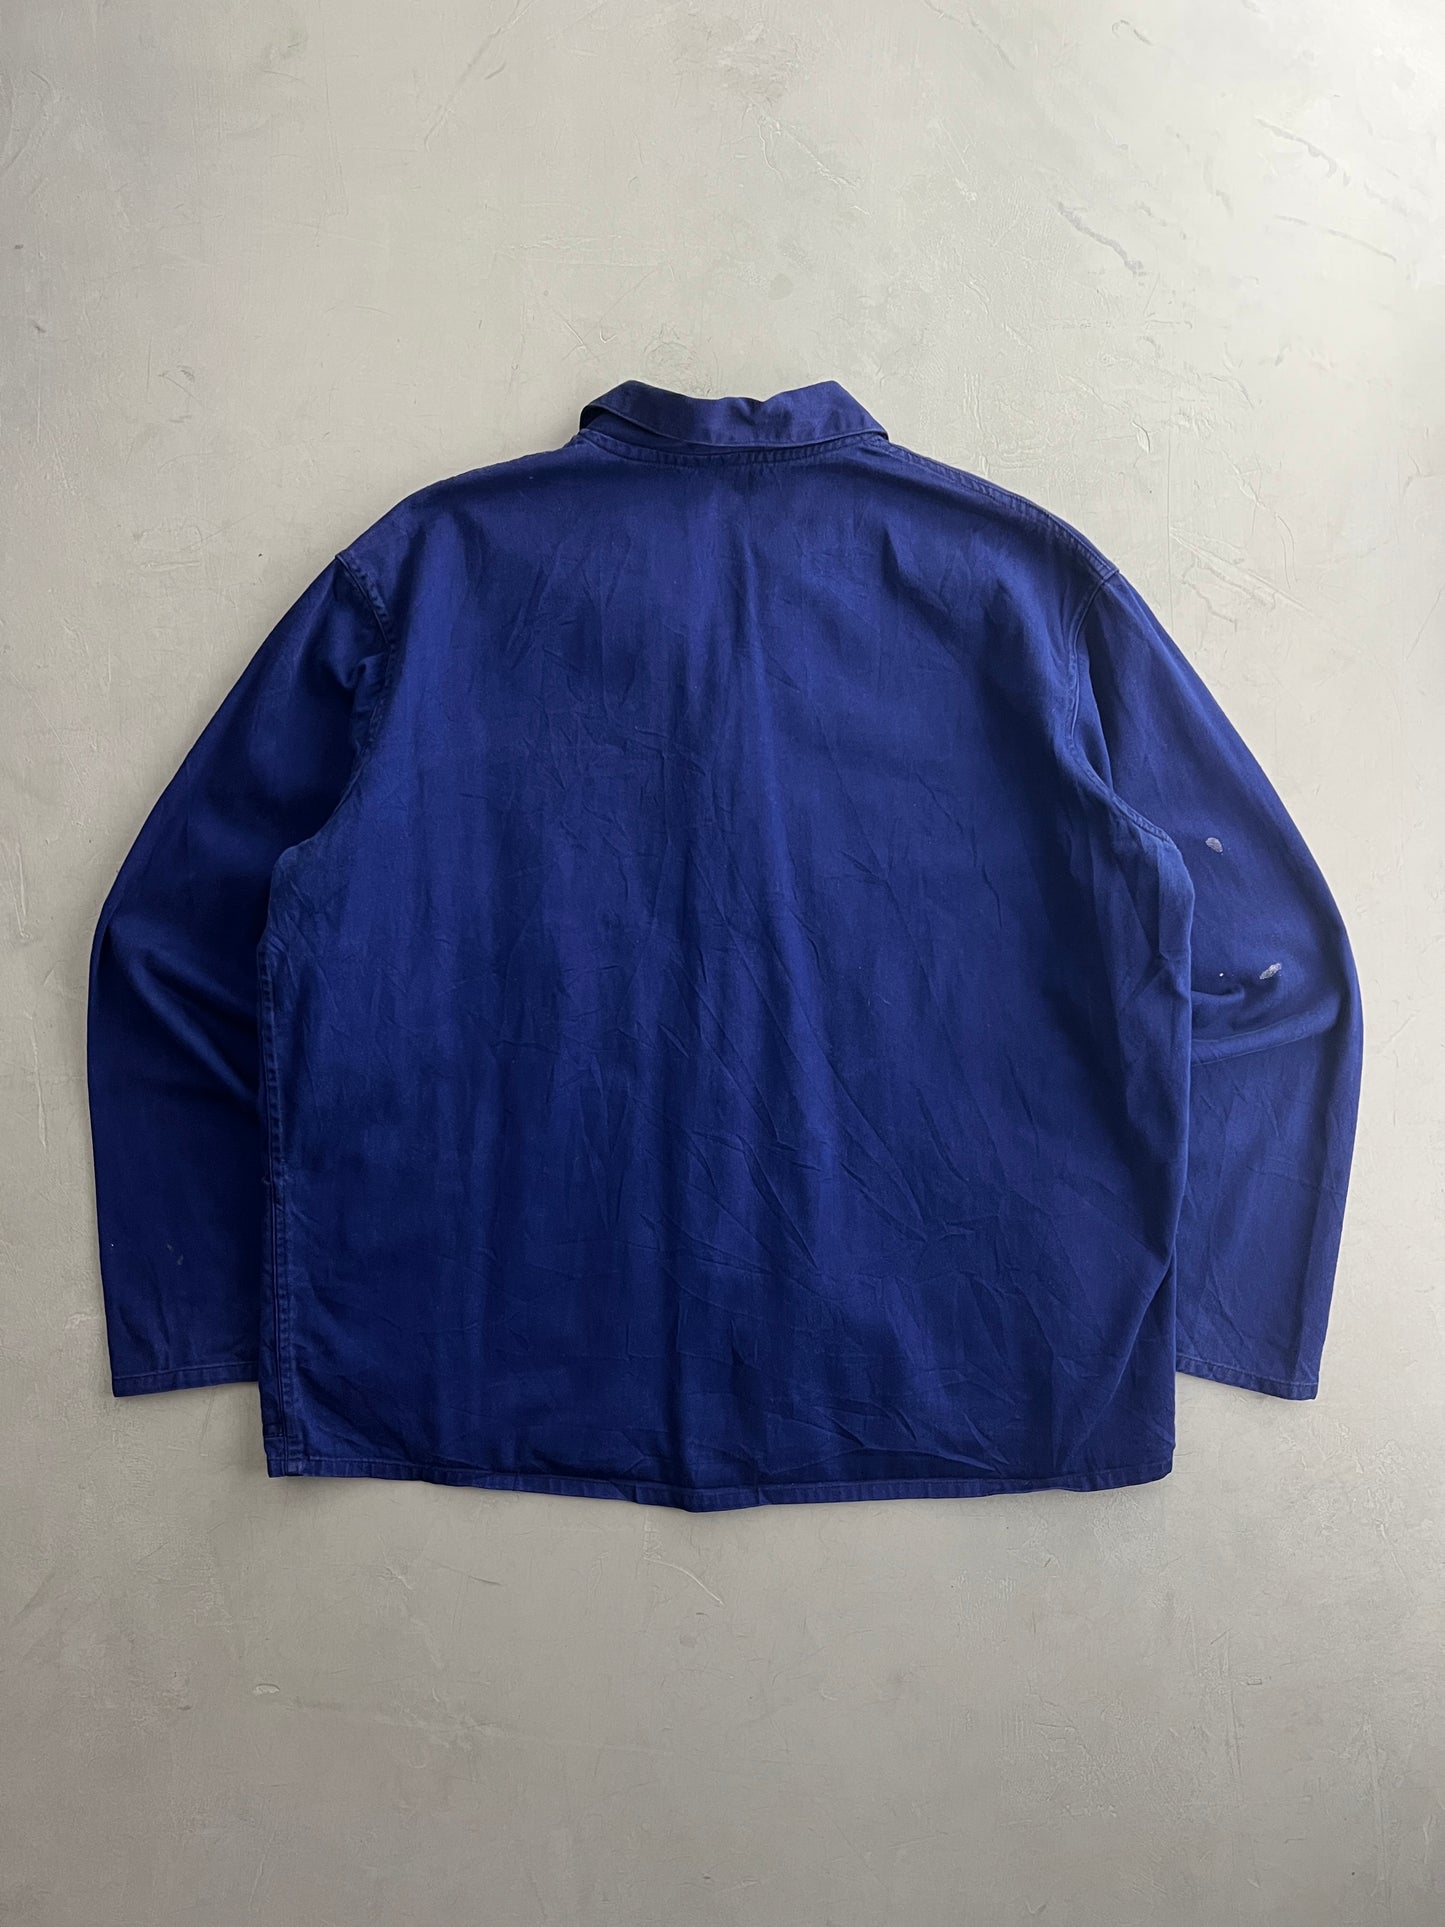 Friendship Chore Jacket [XL]